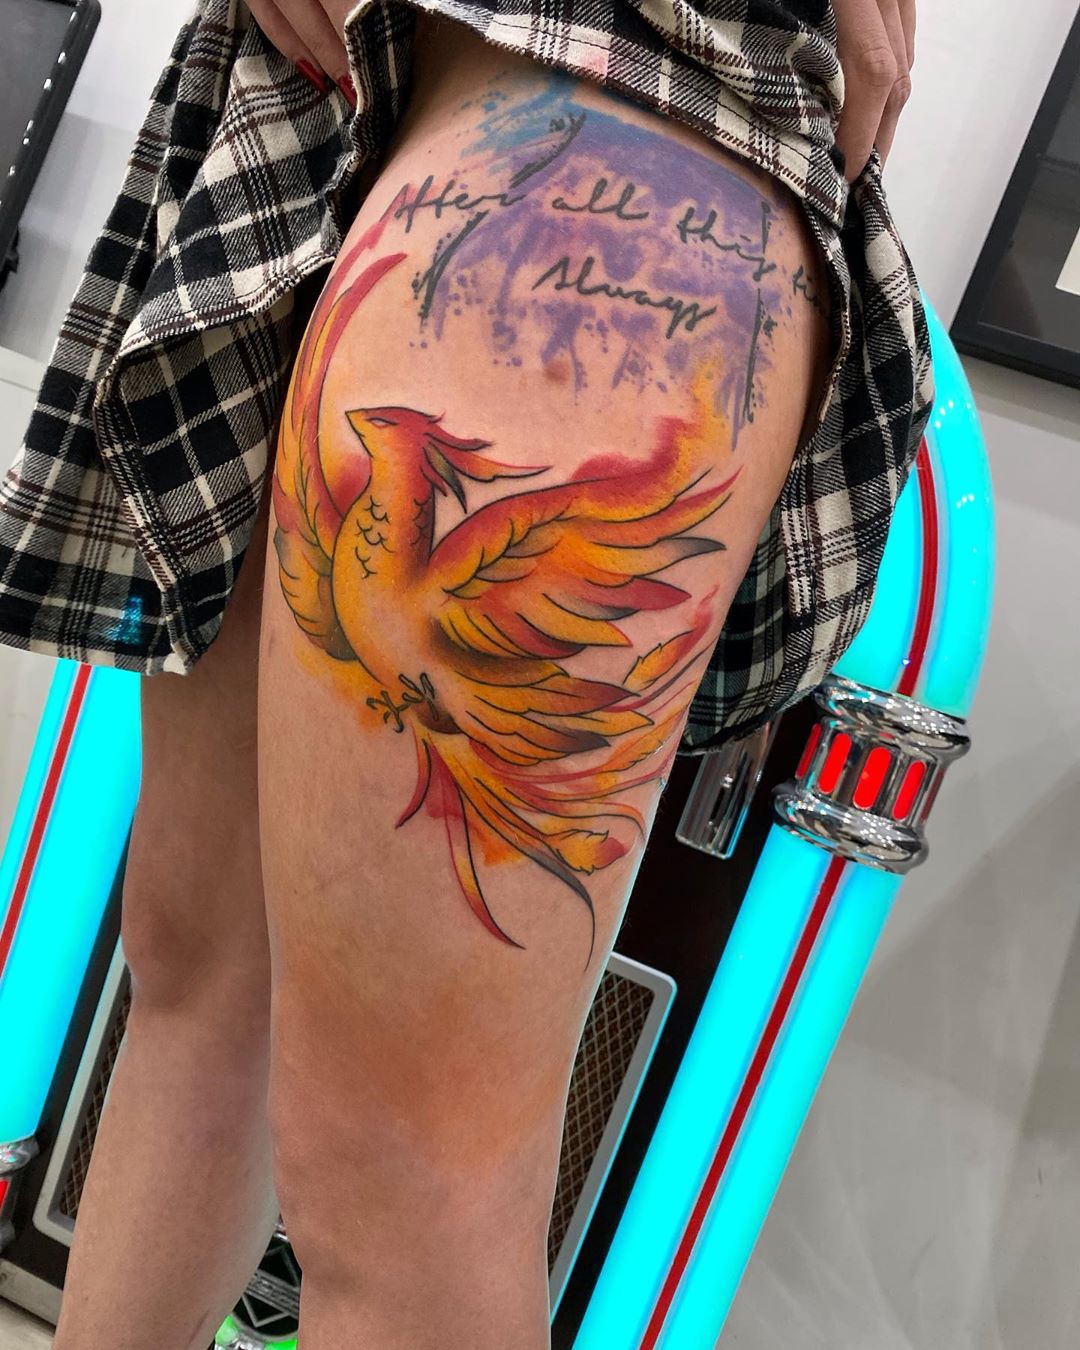 Tattoo uploaded by Gui Moraes  Harry Potter phoenix phoenixtattoo  harrypotter harrypottertattoo fullcolor watercolor sketchstyle fire  flames brasil   Tattoodo